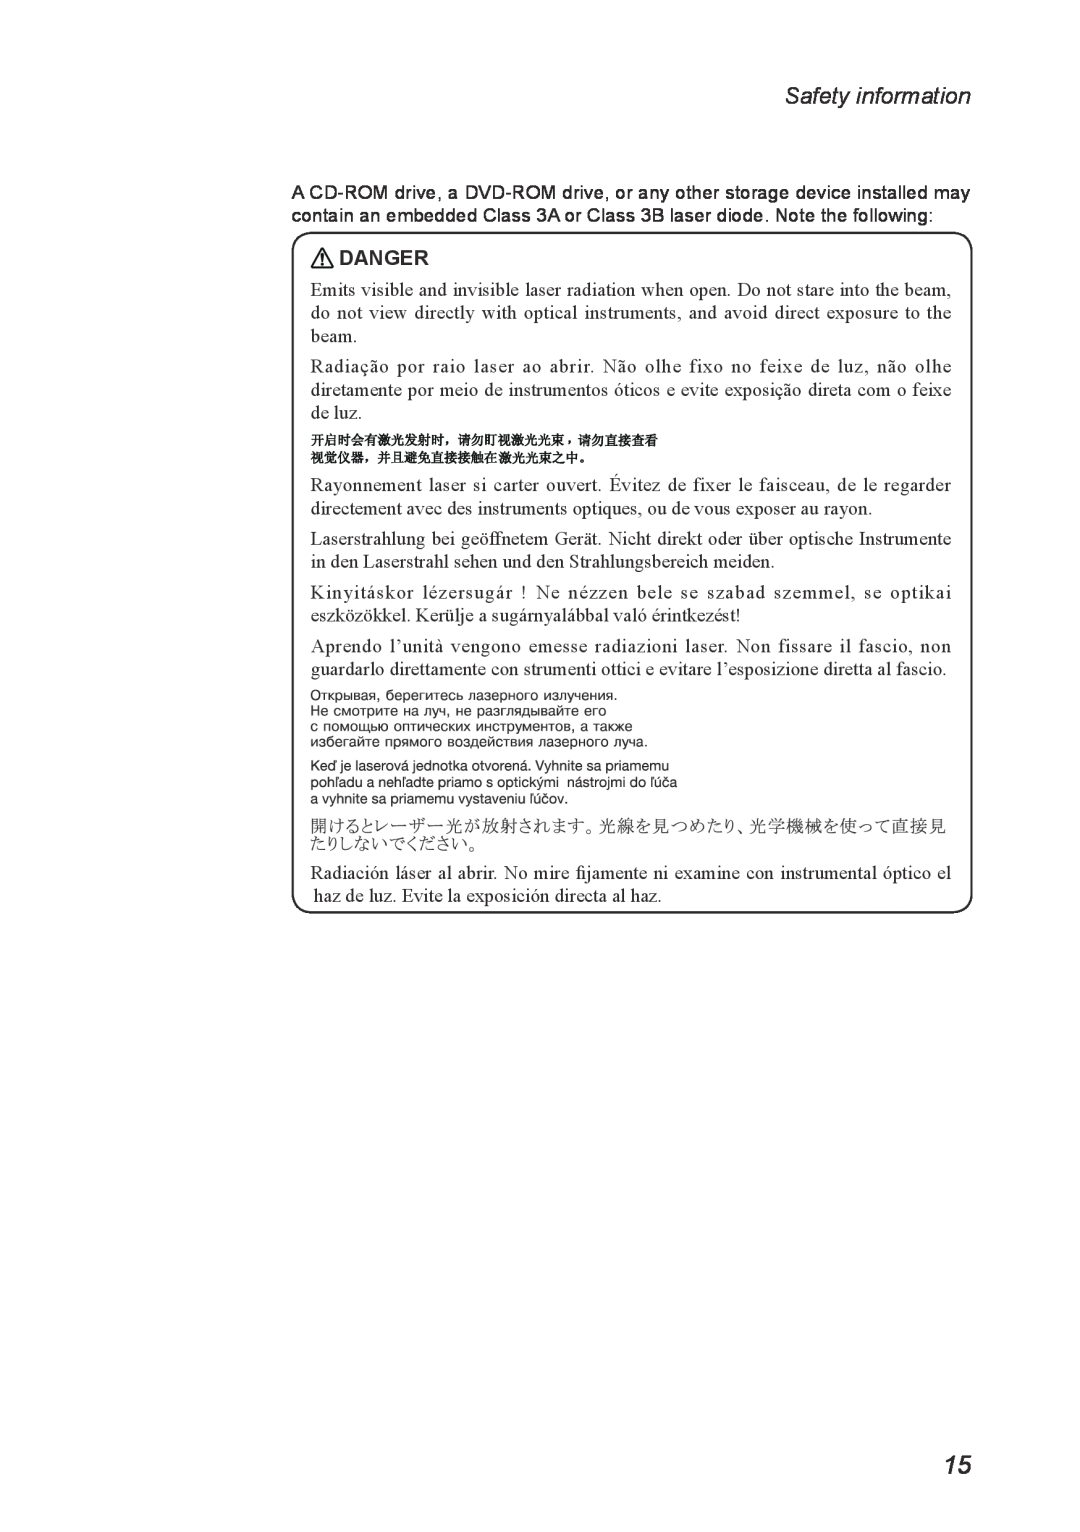 Lenovo 1304XF8, T20x2-1, K1 manual Danger, Safety information 